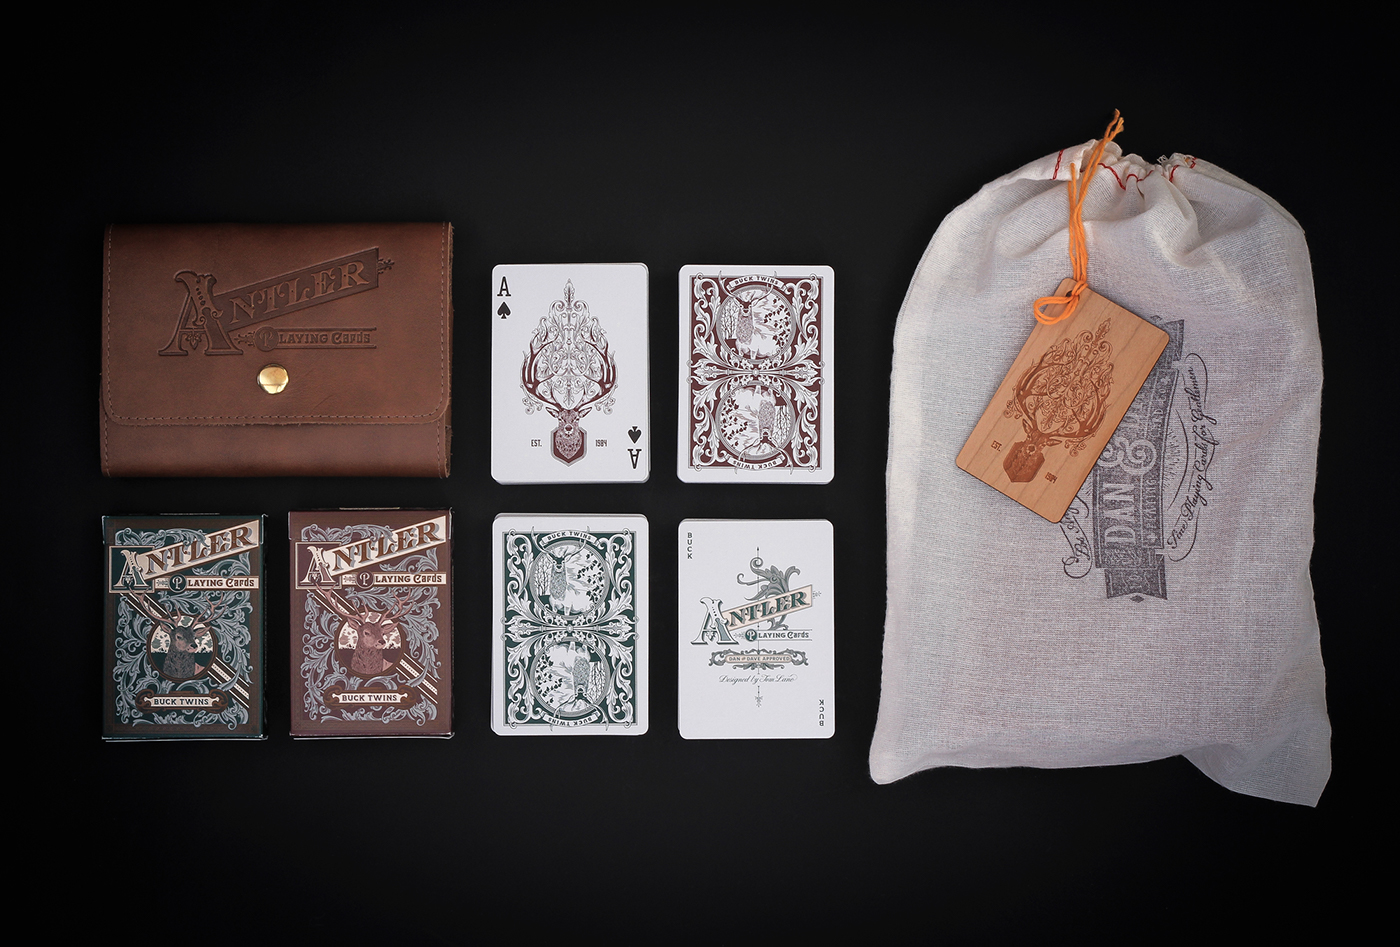 Playingcards packagingdesign detailed vinatge decorative ornate lettering logo logos brands flourishes filigree seals leather